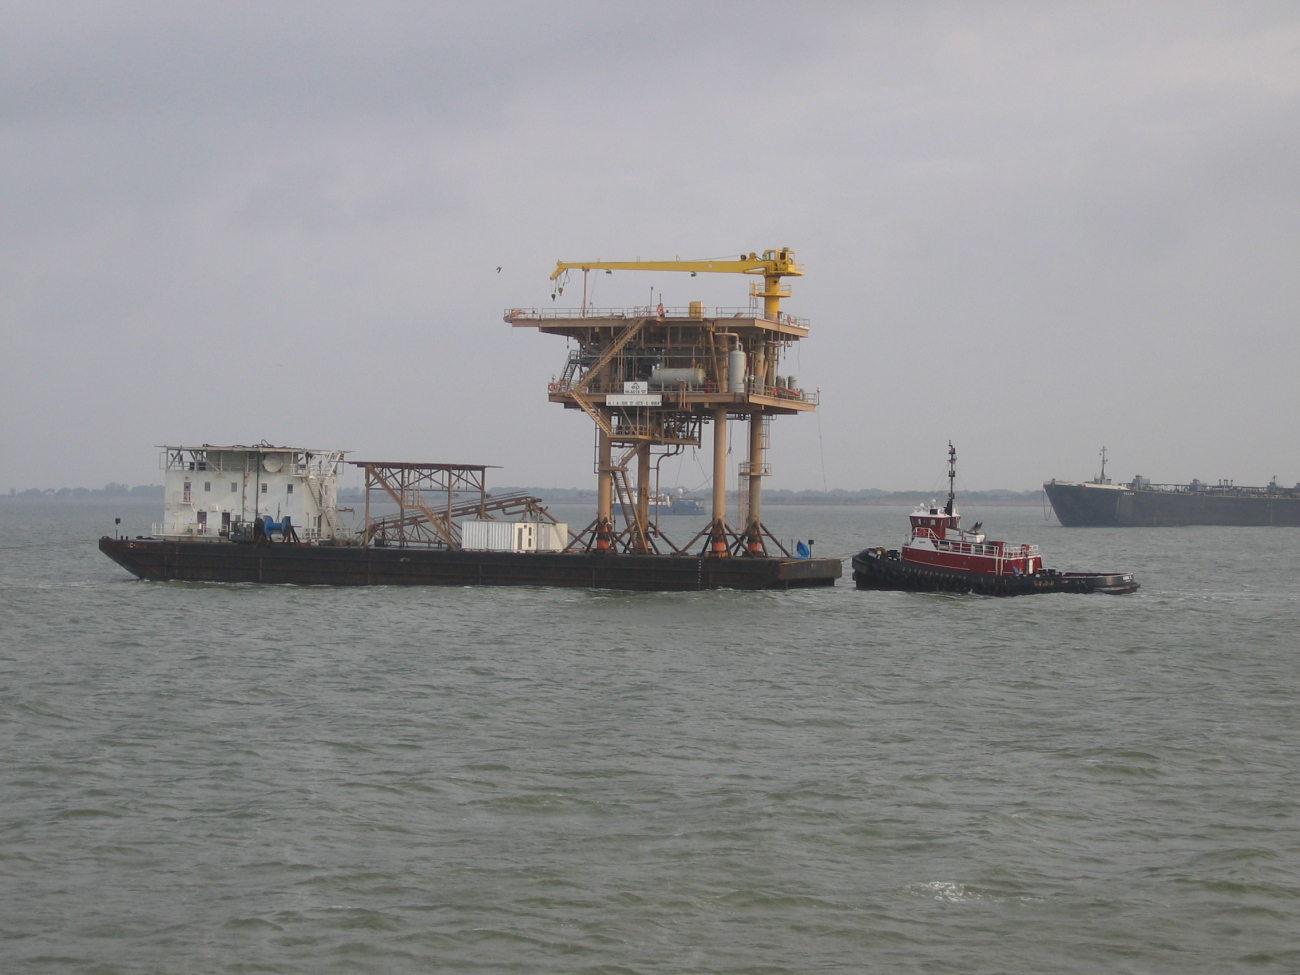 Transporting an oil platform in Galveston Bay